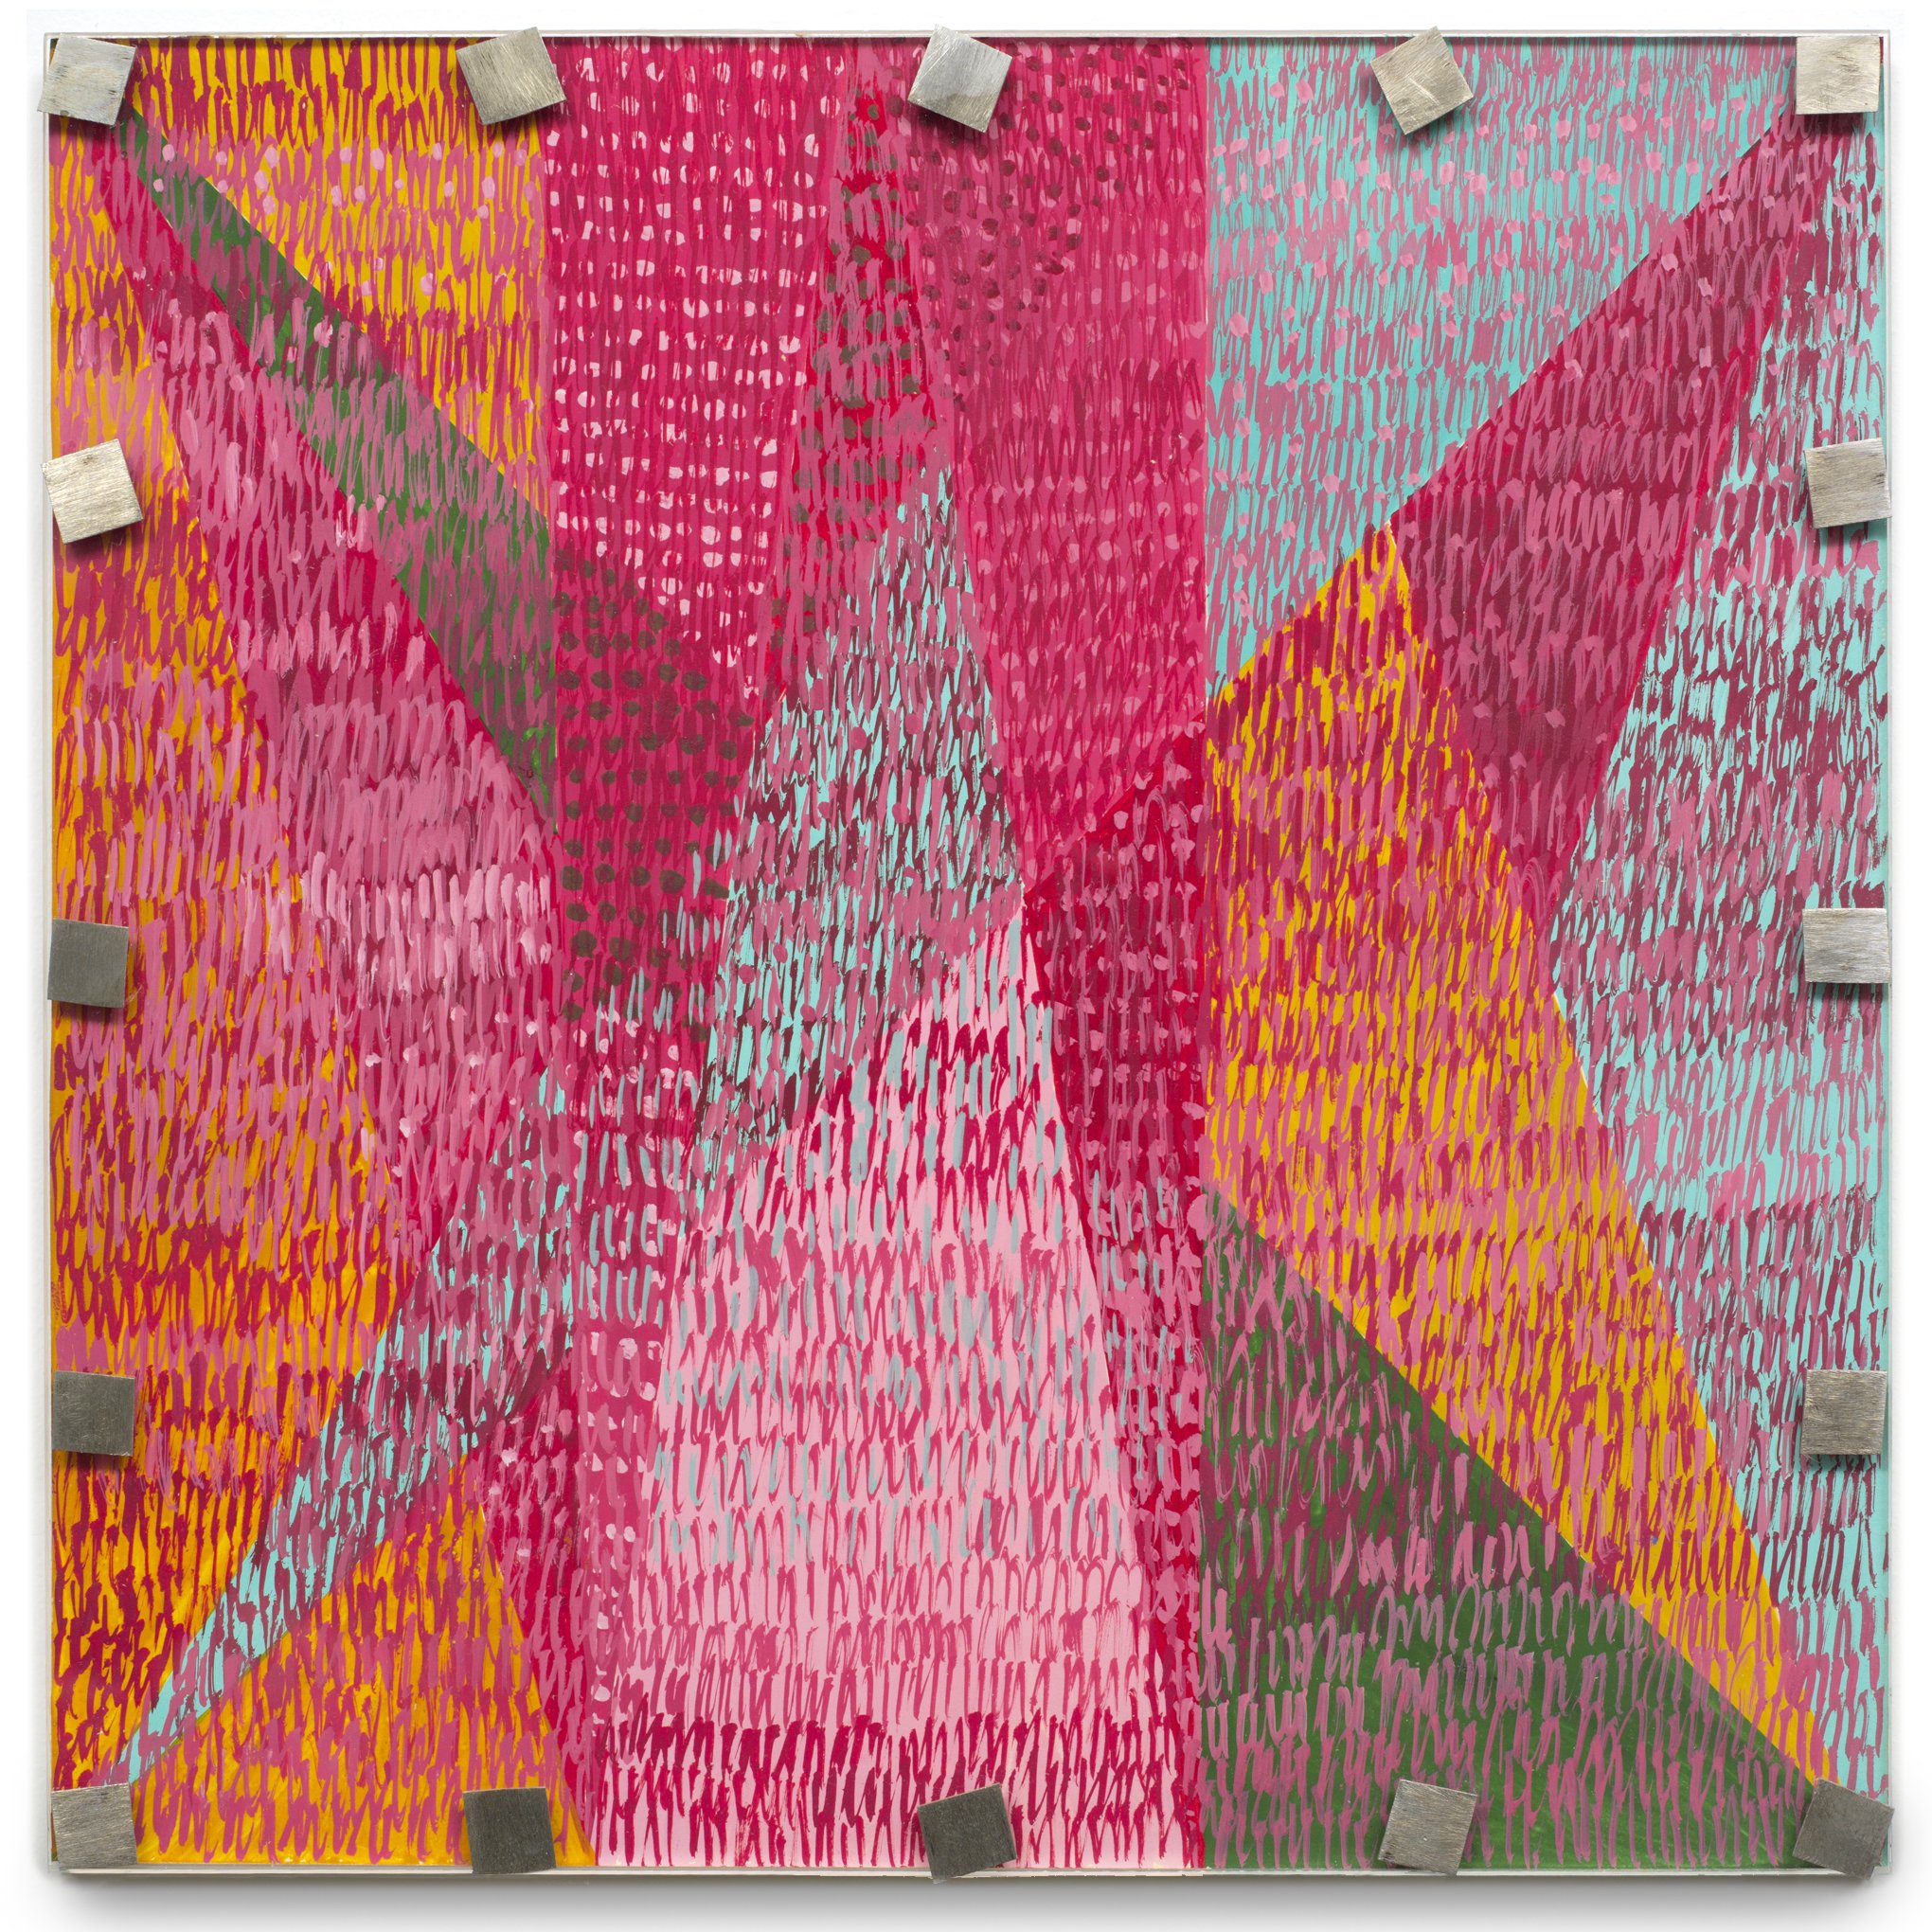  Untitled (Pink), 1984, gouache on paper, white metal, Plexiglas, 12 z 12 in 